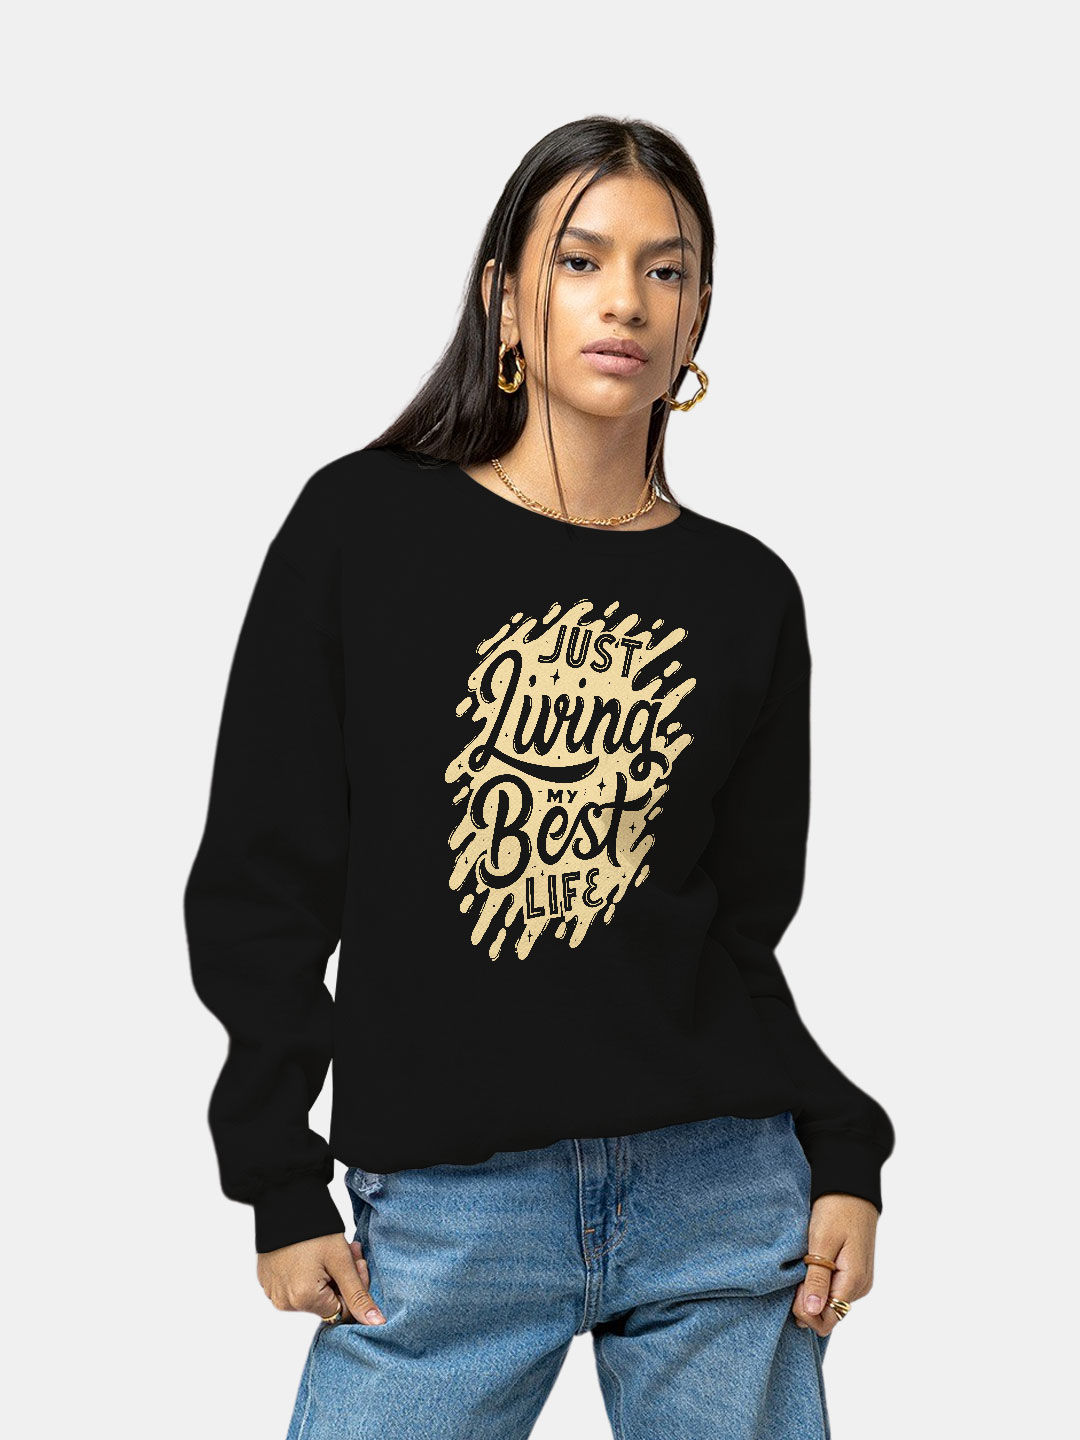 Buy Best Life - Female Designer Sweatshirt Sweatshirts Online